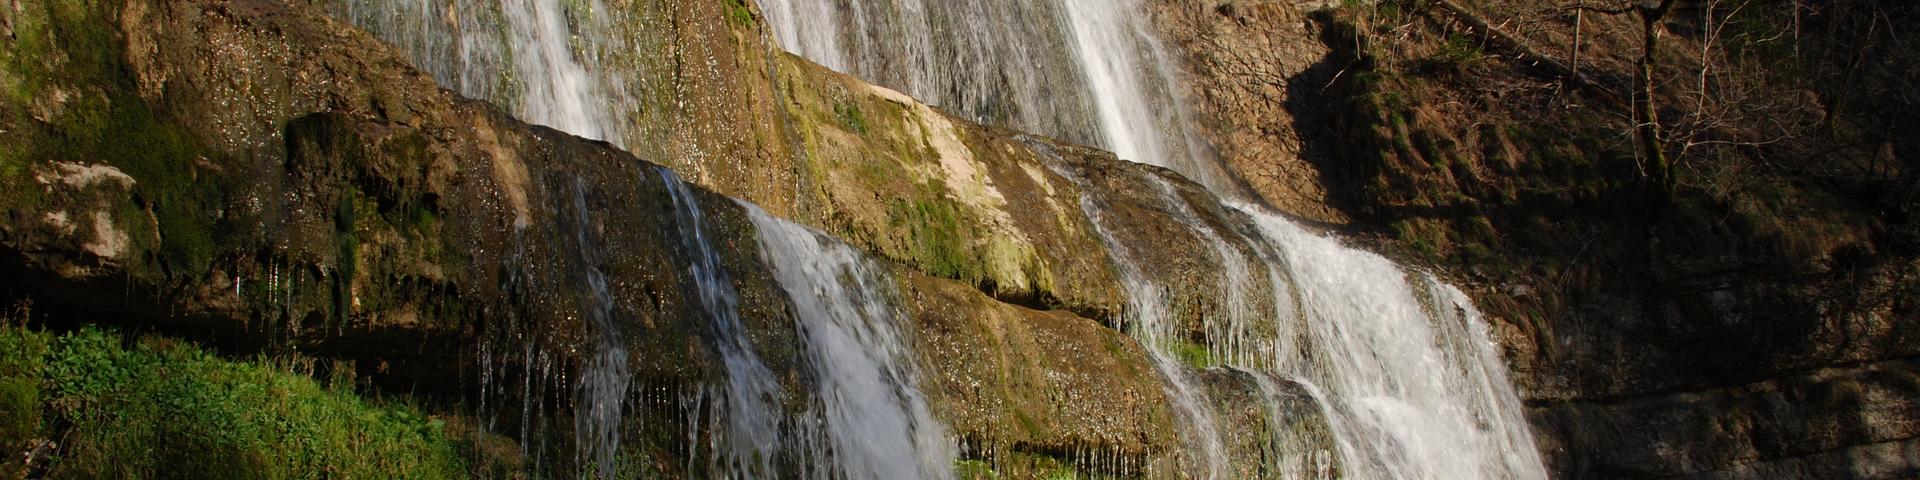 La cascade du Hérisson, Jura